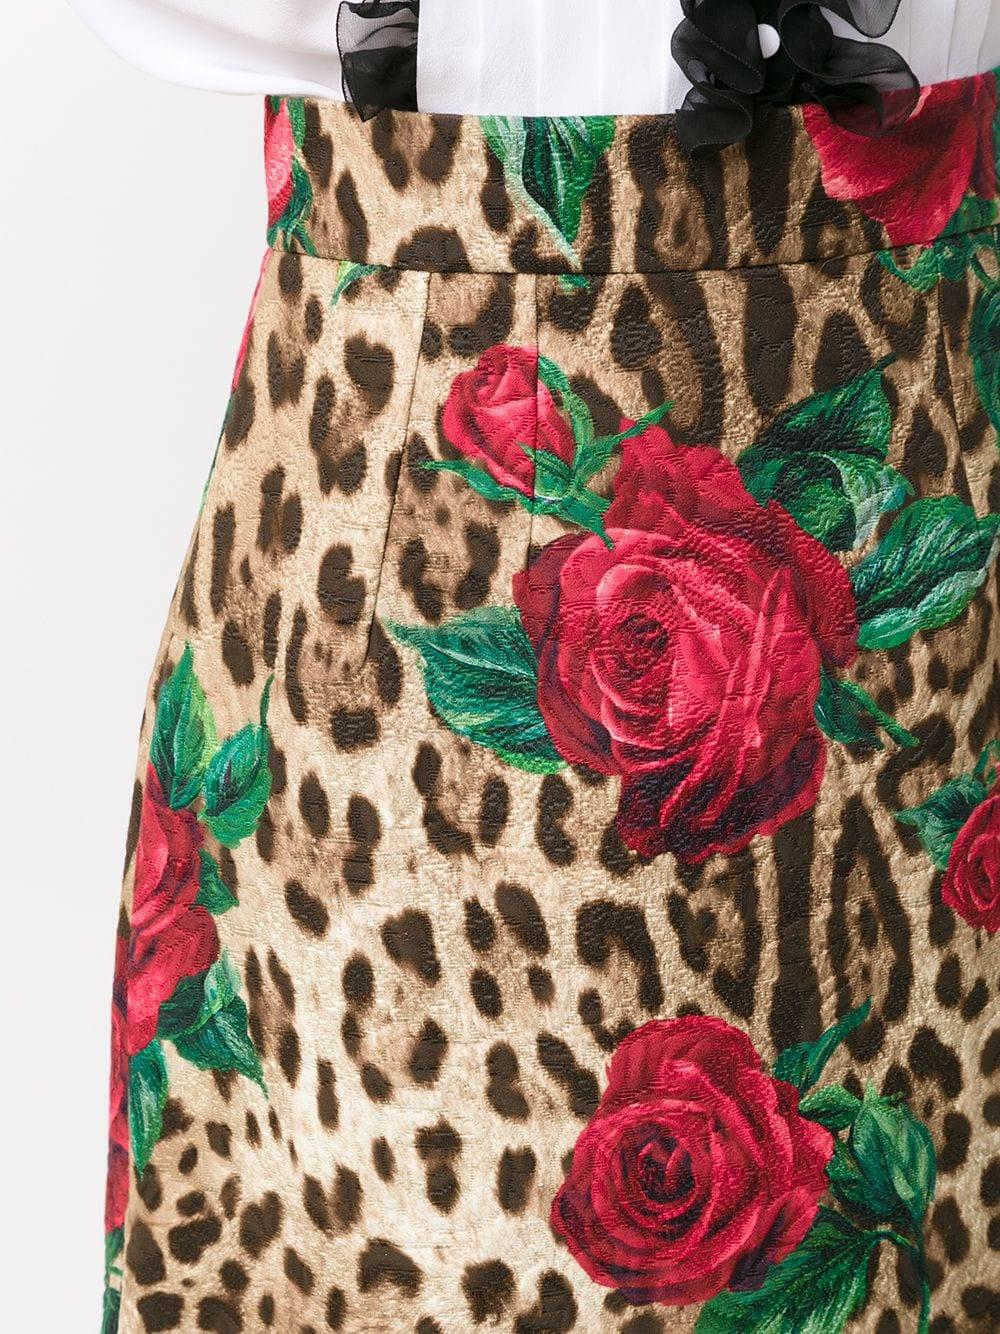 DOLCE & GABBANA LEOPARD Print Multicolour Rose  Skirt Veronique Luxury Collections